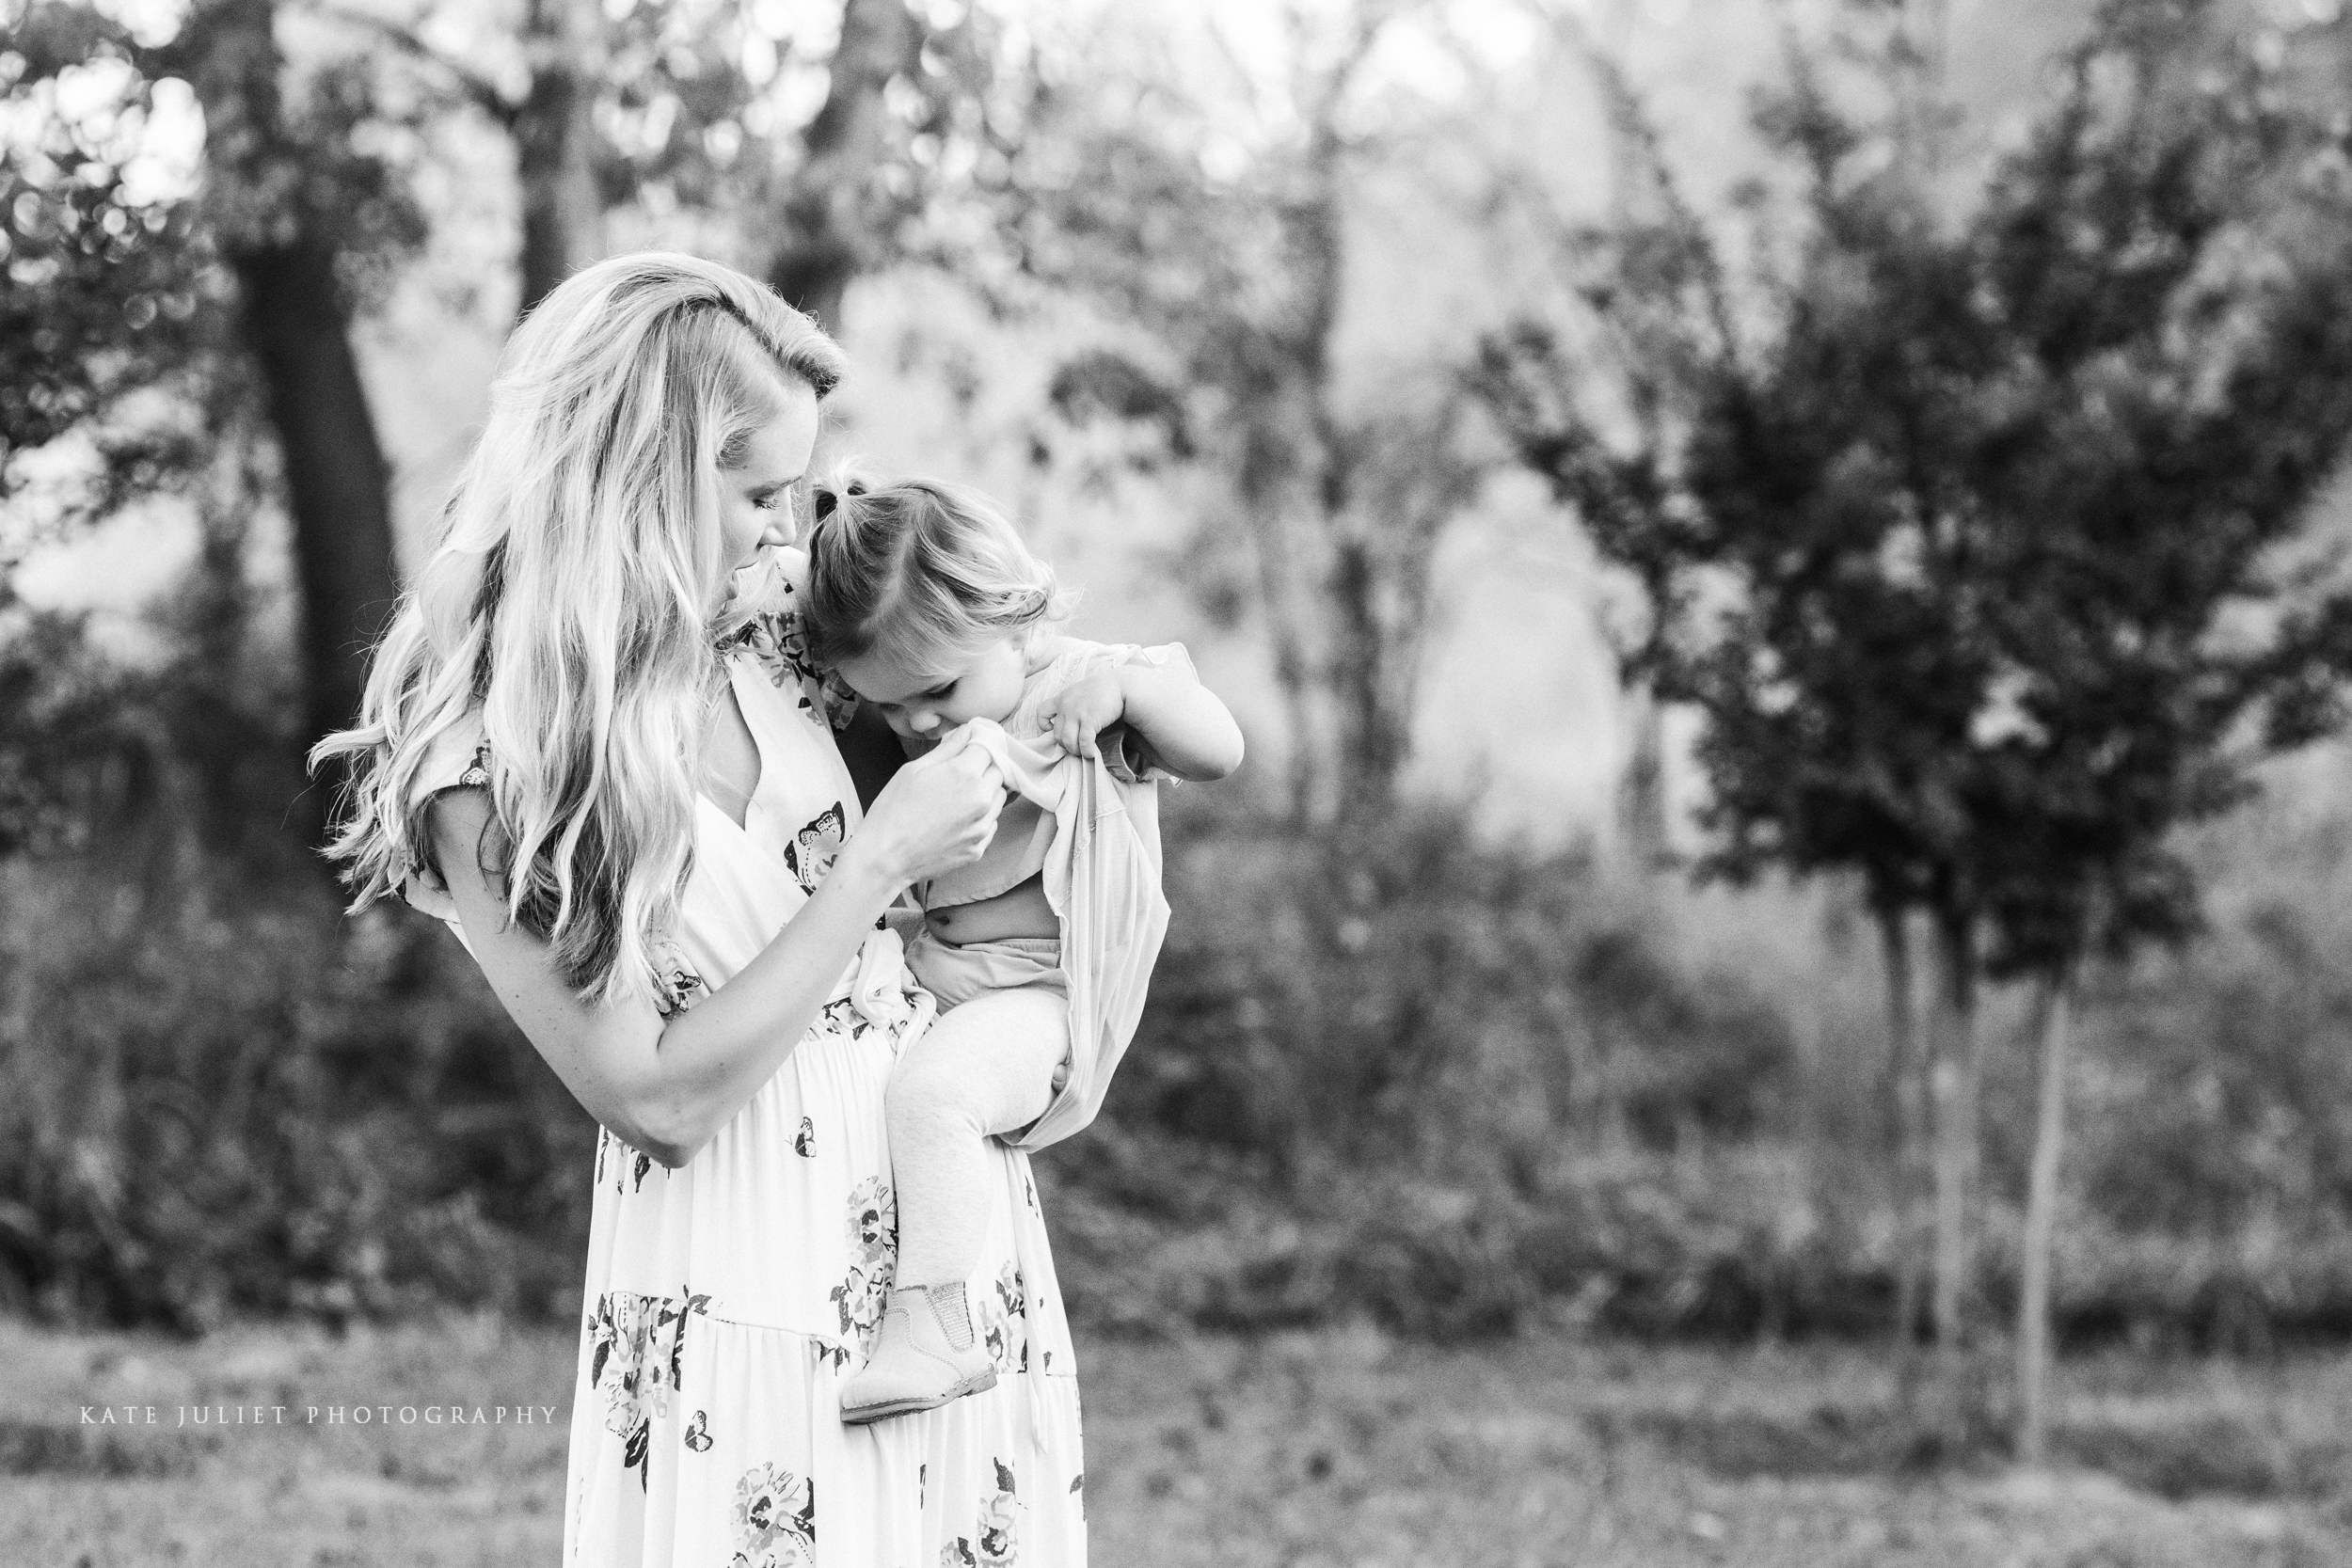 Northern VA Family Photographer | Kate Juliet Photography